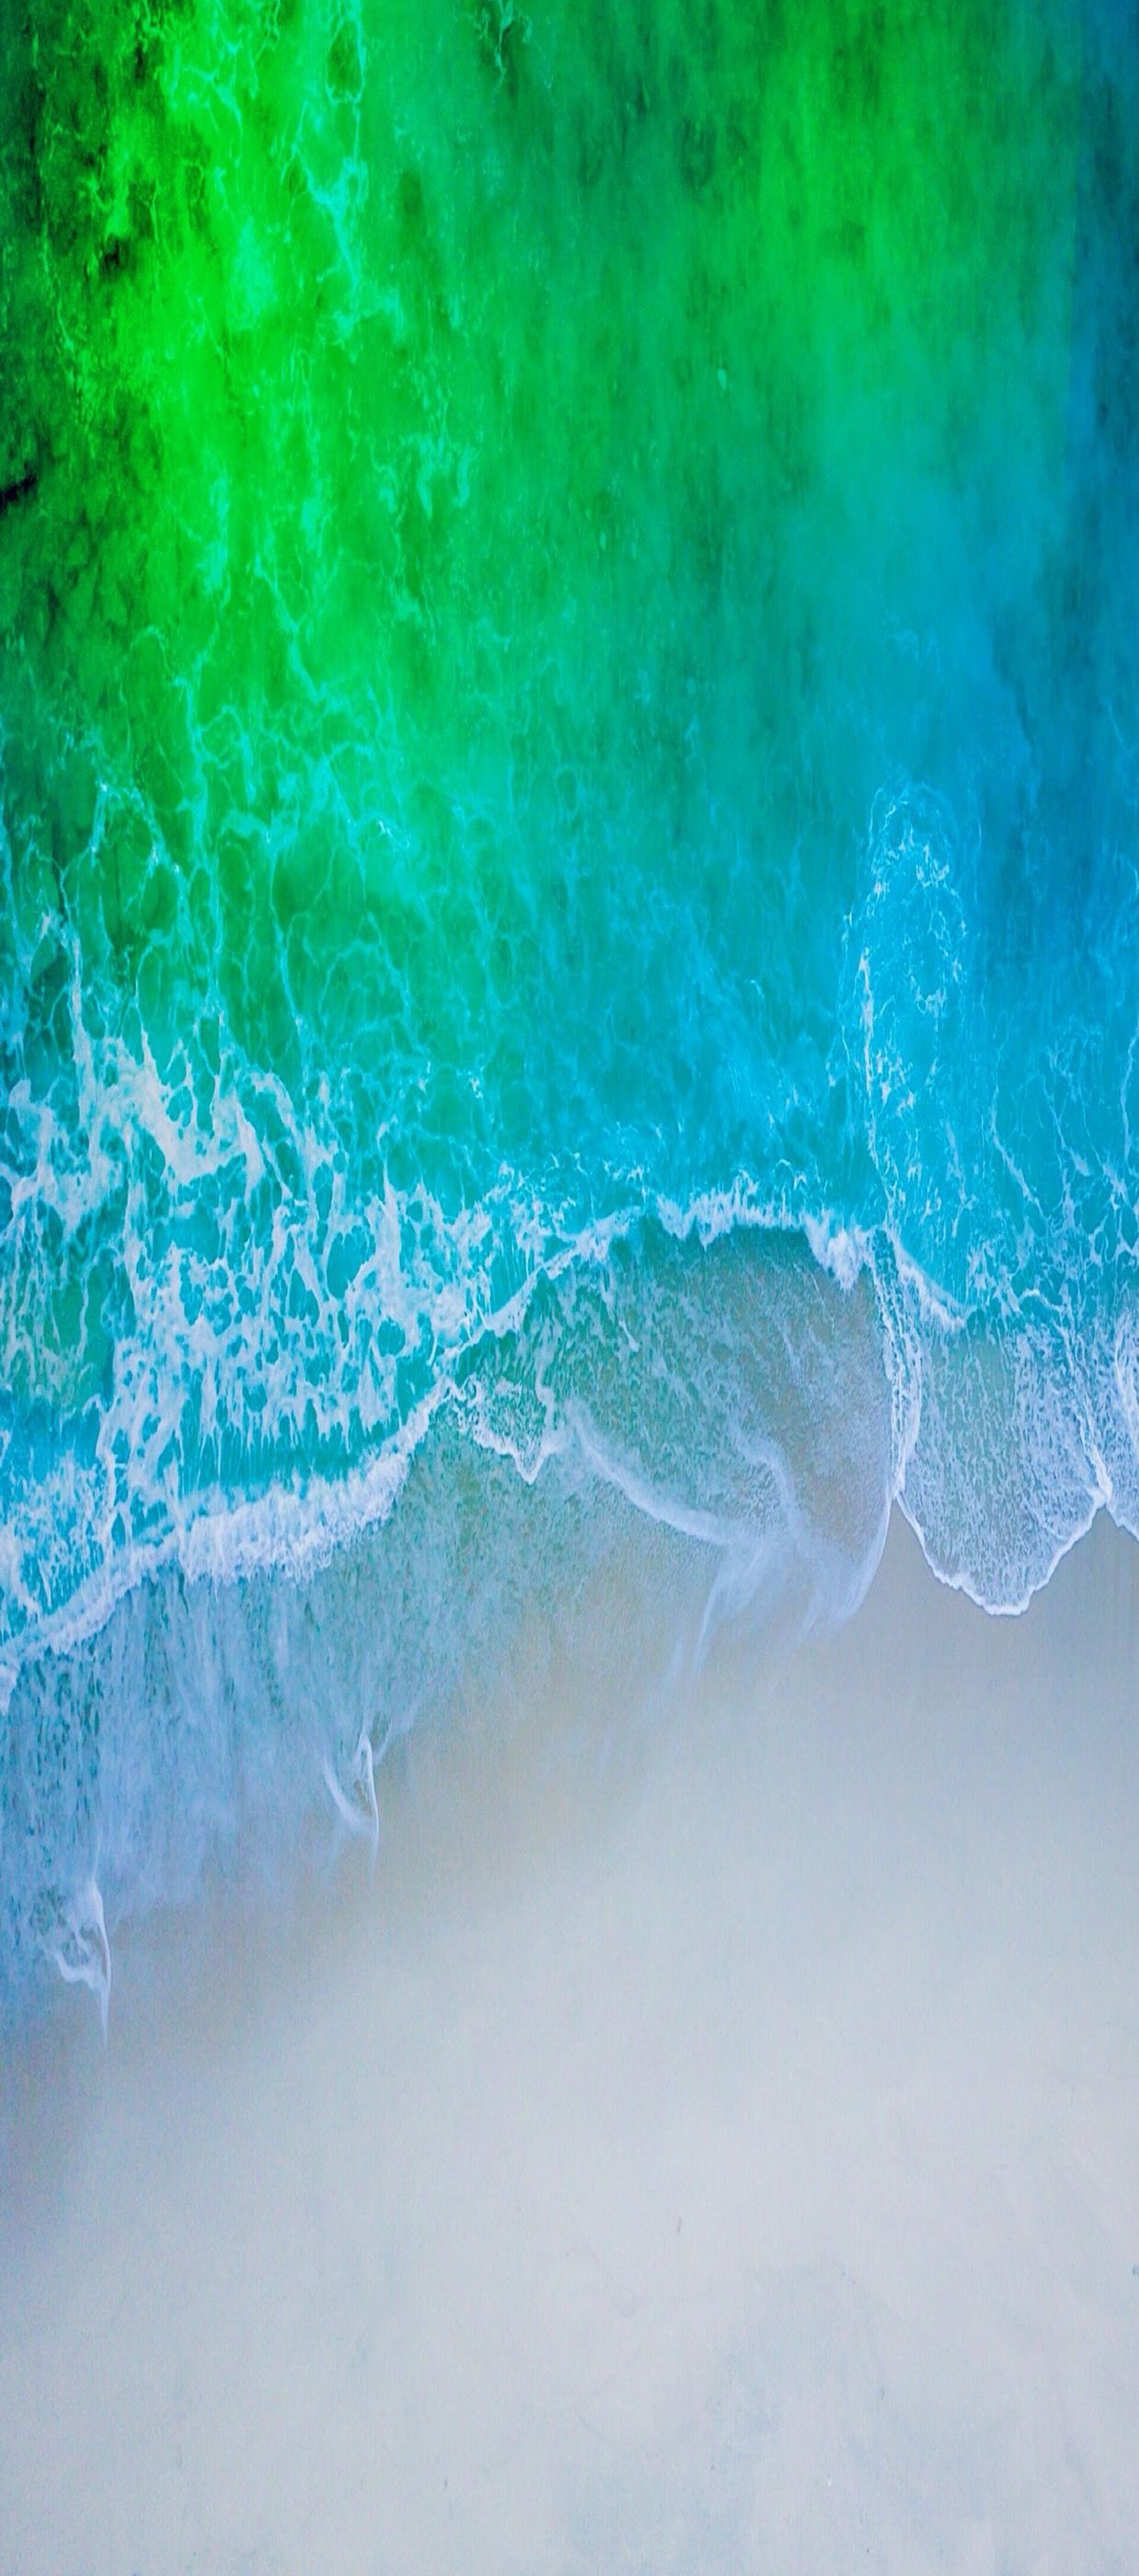 Free Download Ios 11 Iphone X Aqua Blue Water Beach Wave Ocean Apple 1238x2800 For Your Desktop Mobile Tablet Explore 51 Iphone 7 Plus Wallpaper Aqua Iphone 7 Plus